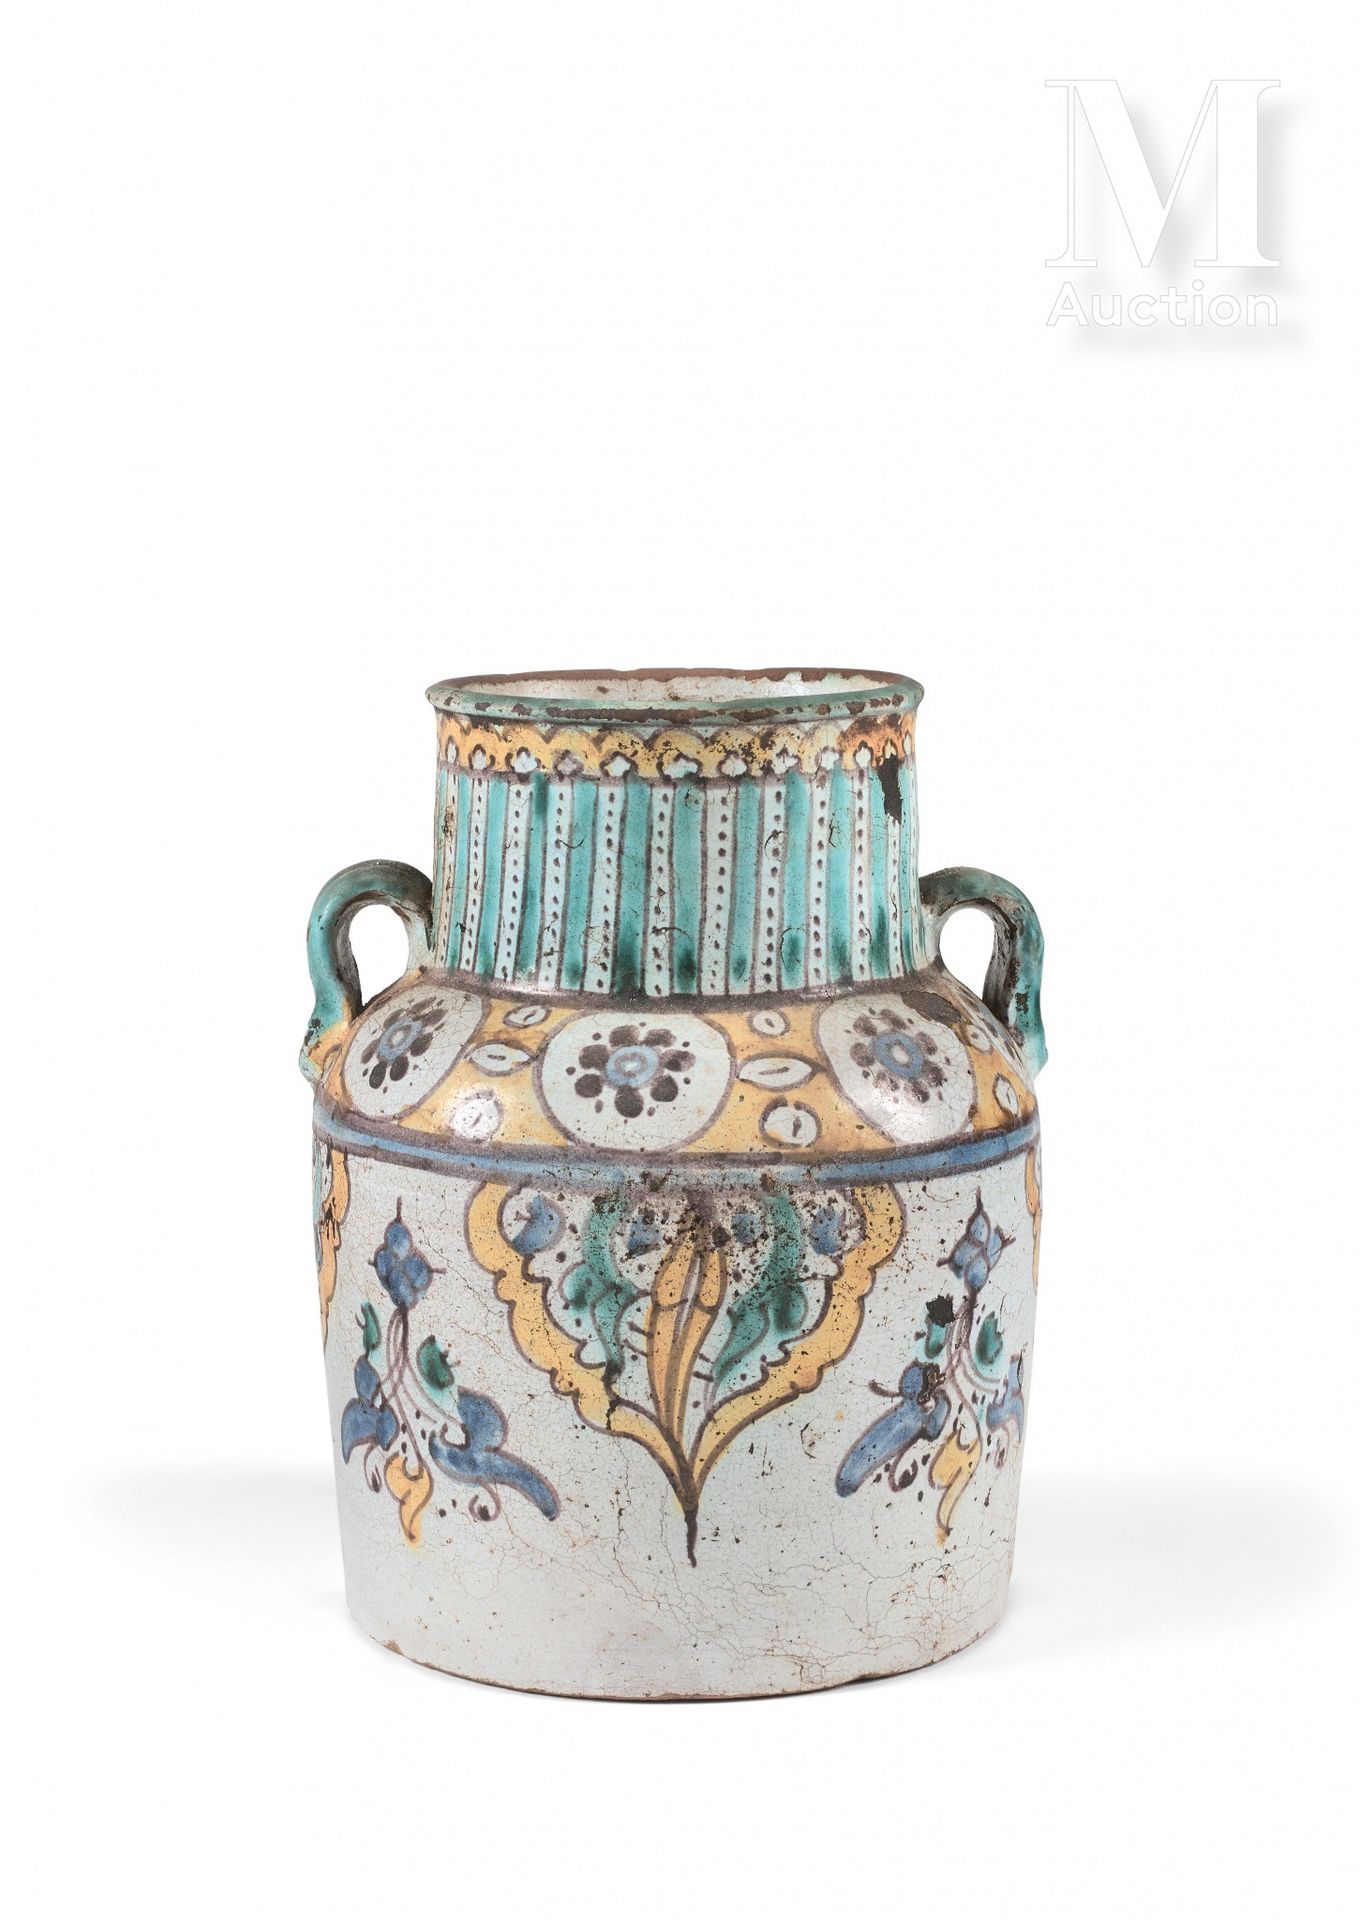 Qolla - Jarre à deux anses Marocco, Fez, XVIII secolo

Ceramica policroma dipint&hellip;